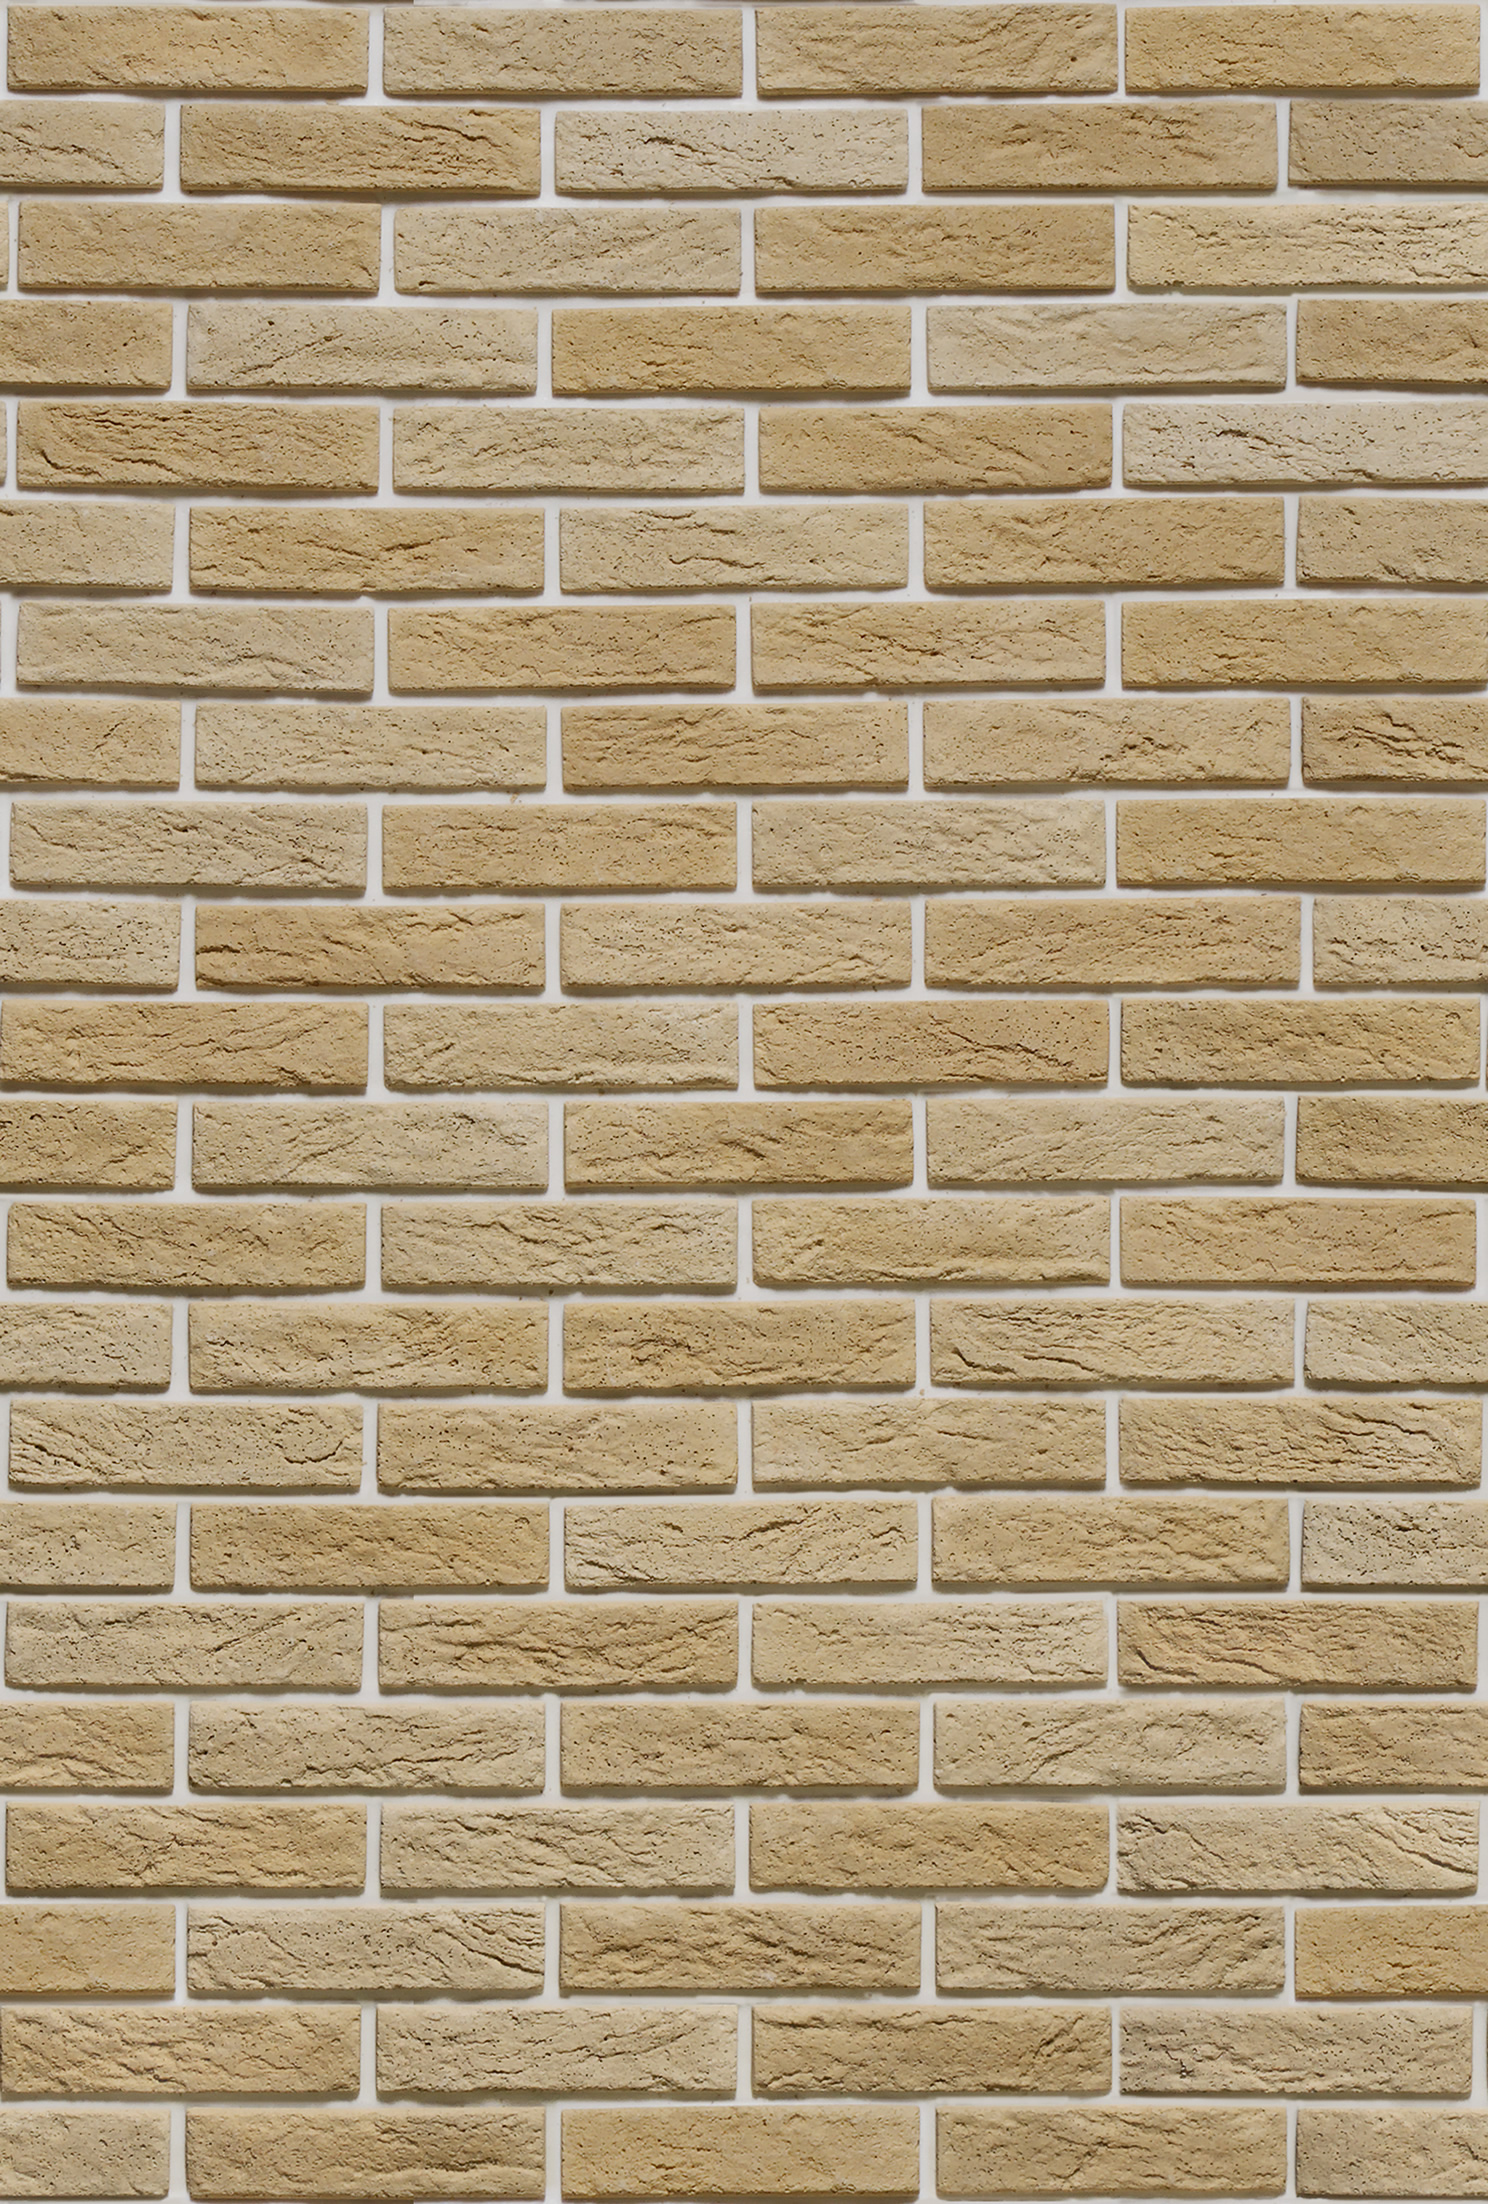  decorative brick, background, texture, download photo, brick texture